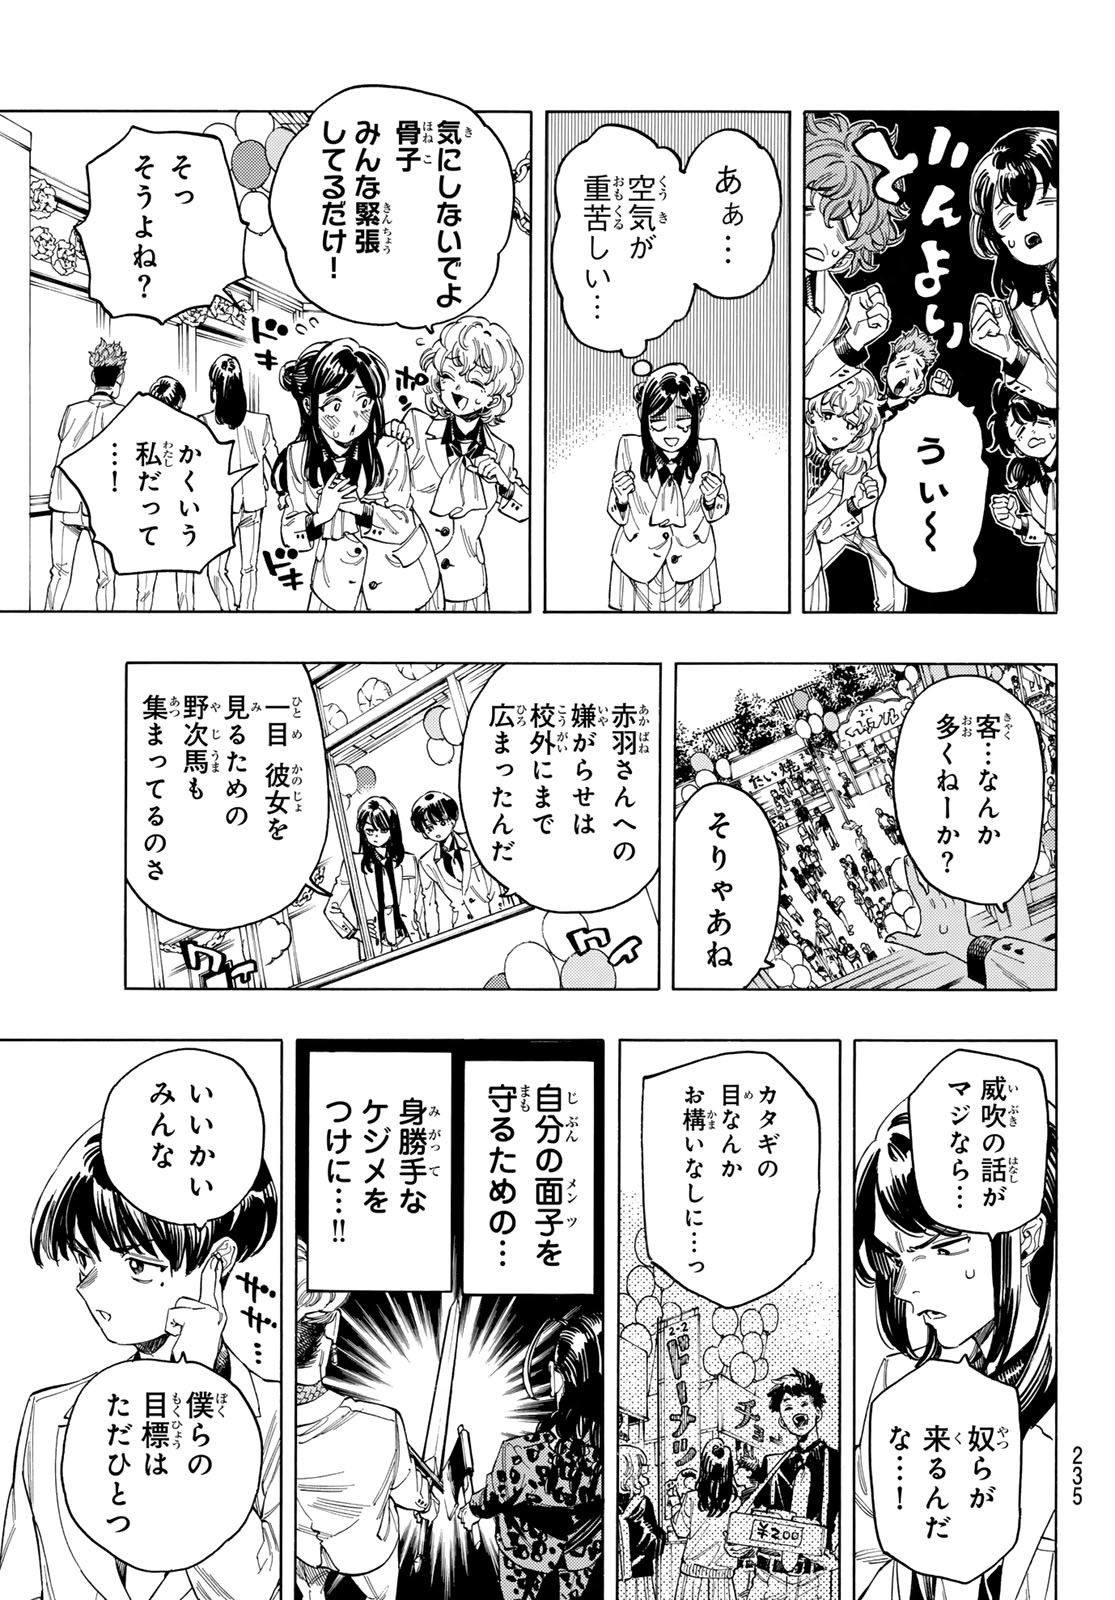 Akabane Honeko no Bodyguard - Chapter 58 - Page 3